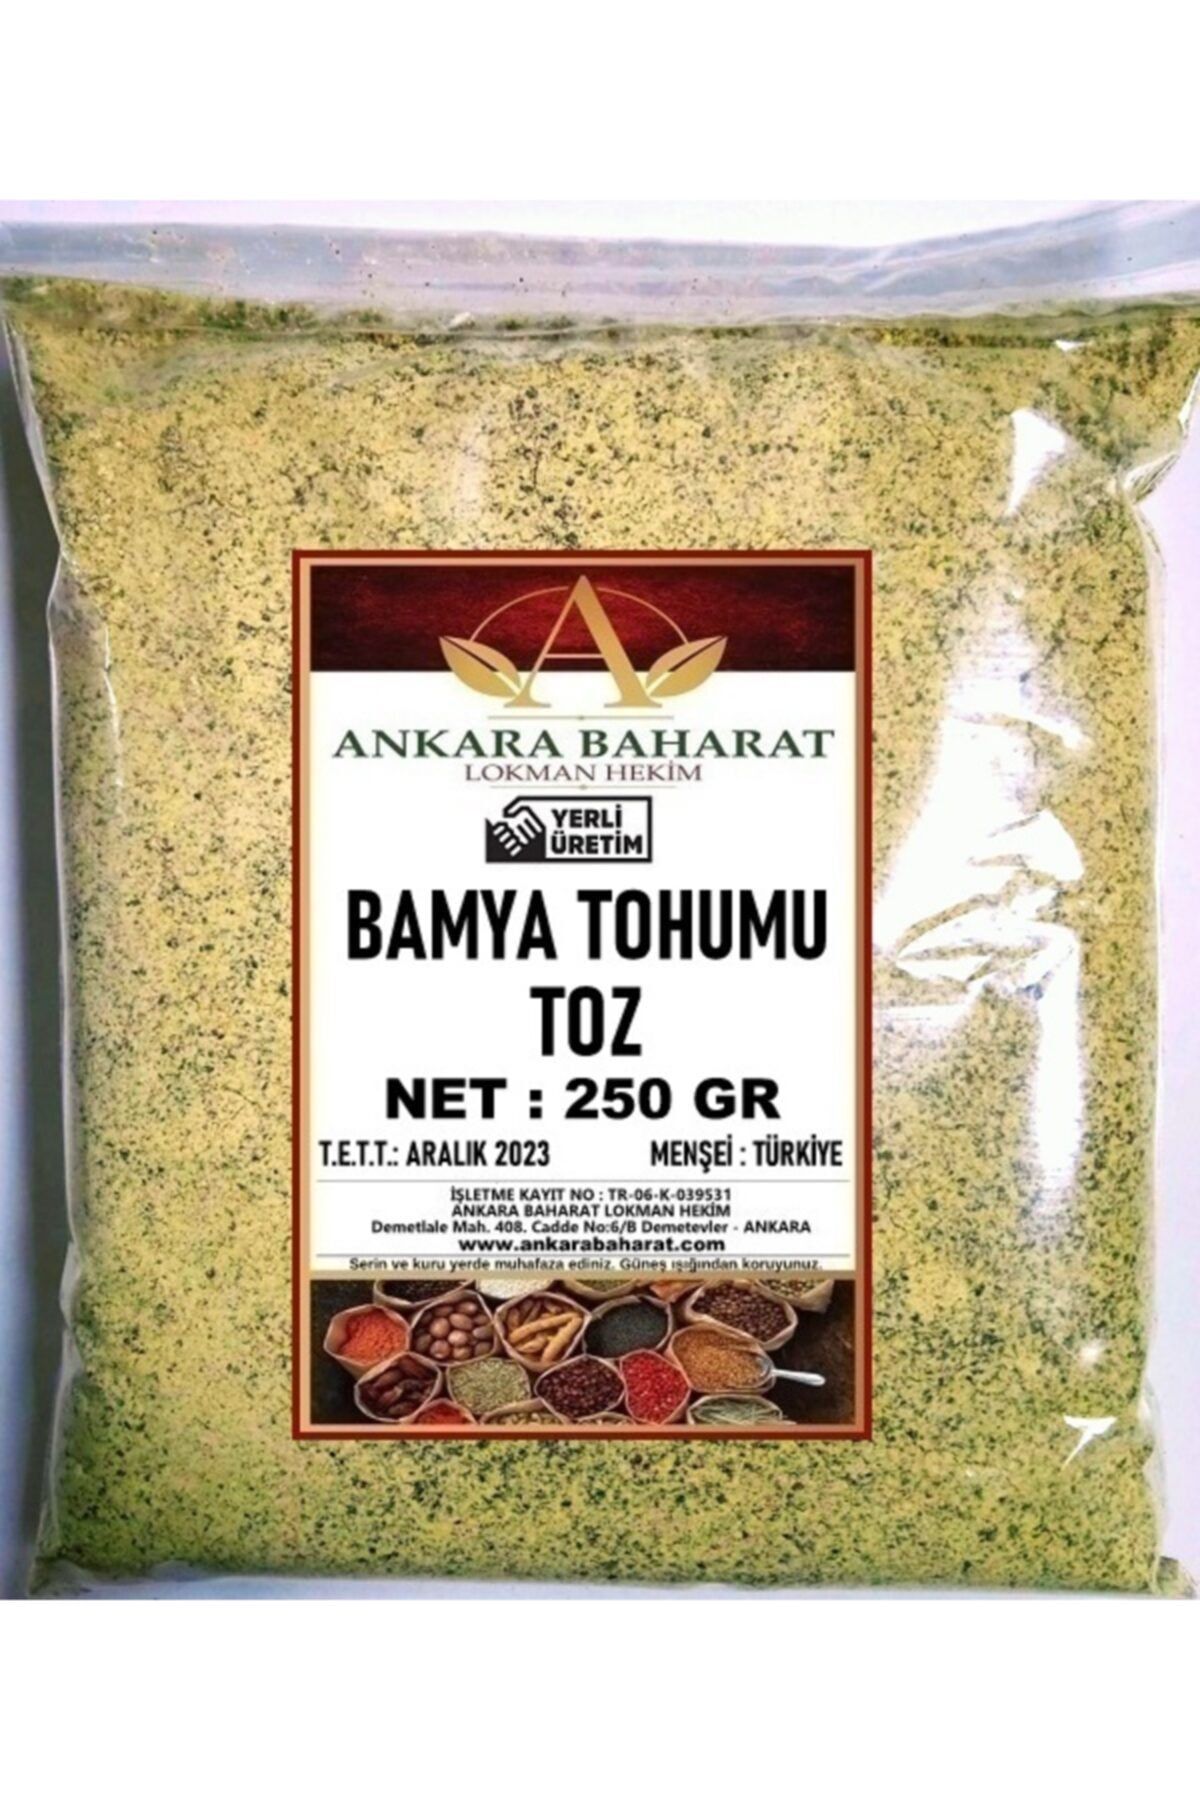 ankara baharat lokman hekim Bamya Tohumu Tozu Öğütülmüş Yerli - 250 Gram